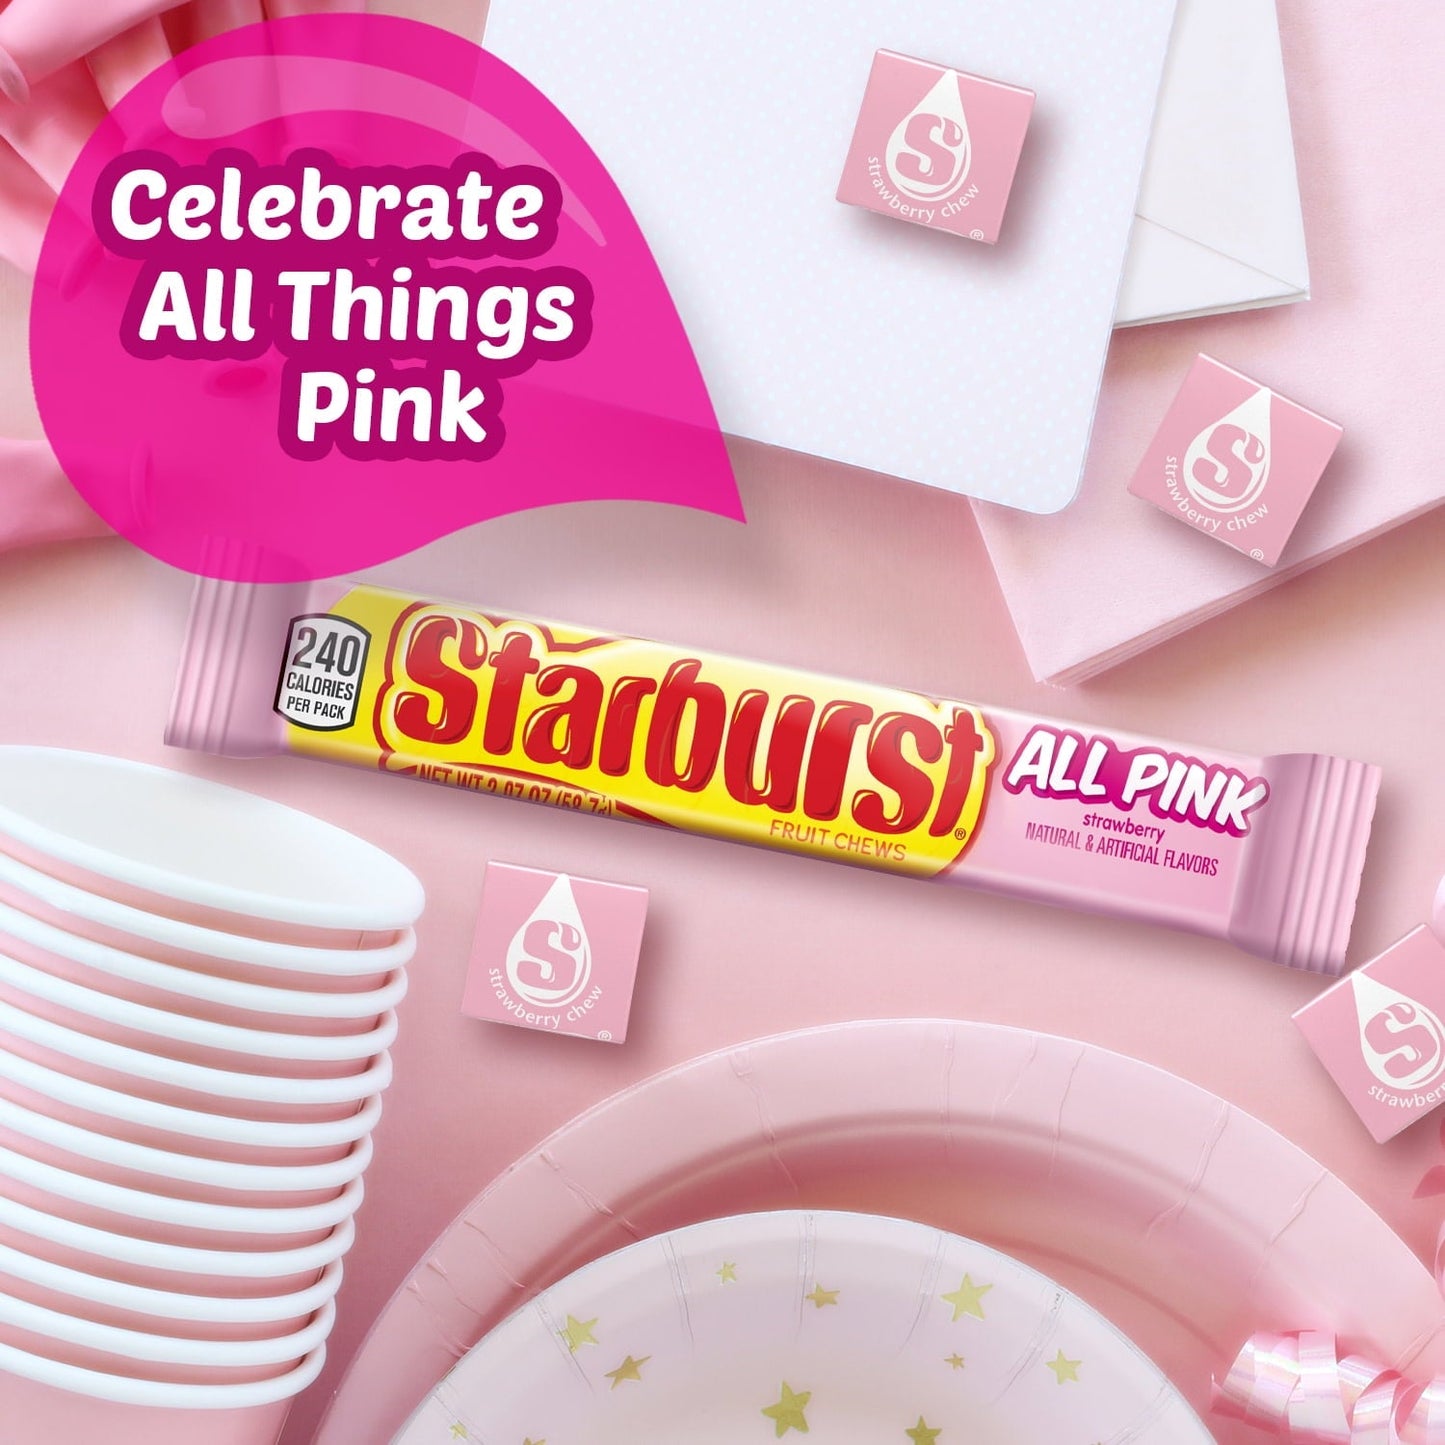 Starburst All Pink Fruit Chews Gummy Candy, Full Size - 2.07 oz